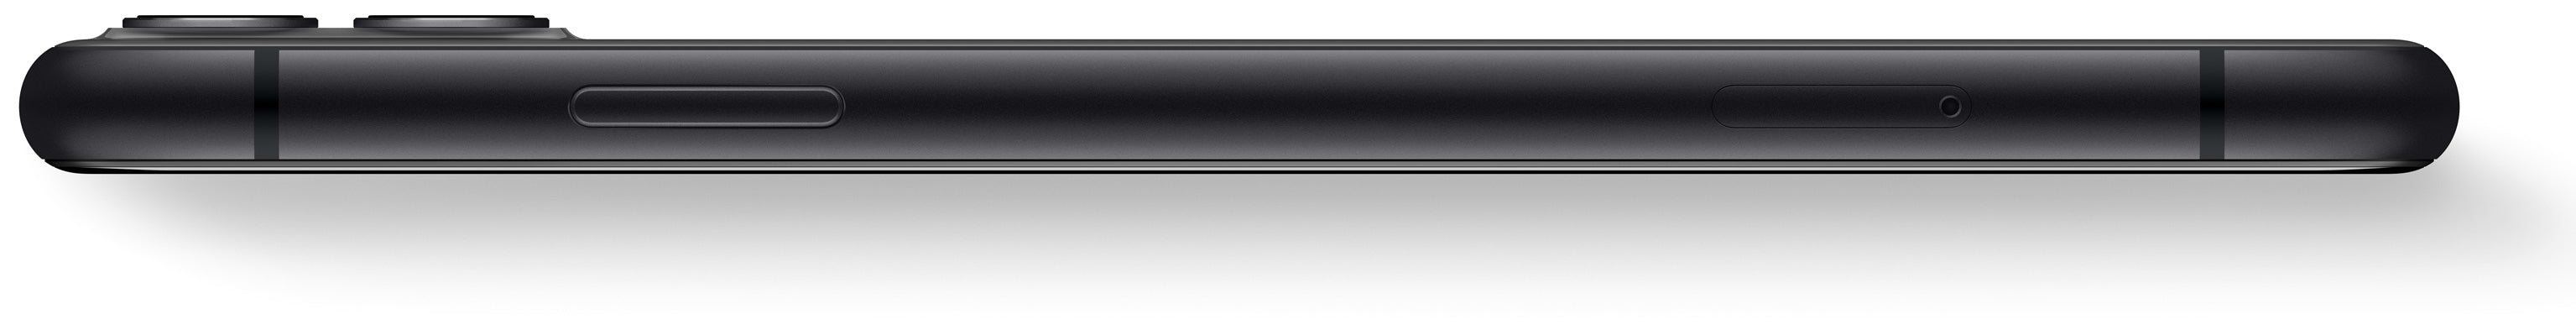 Apple iPhone 11 64gb Black EU - 10